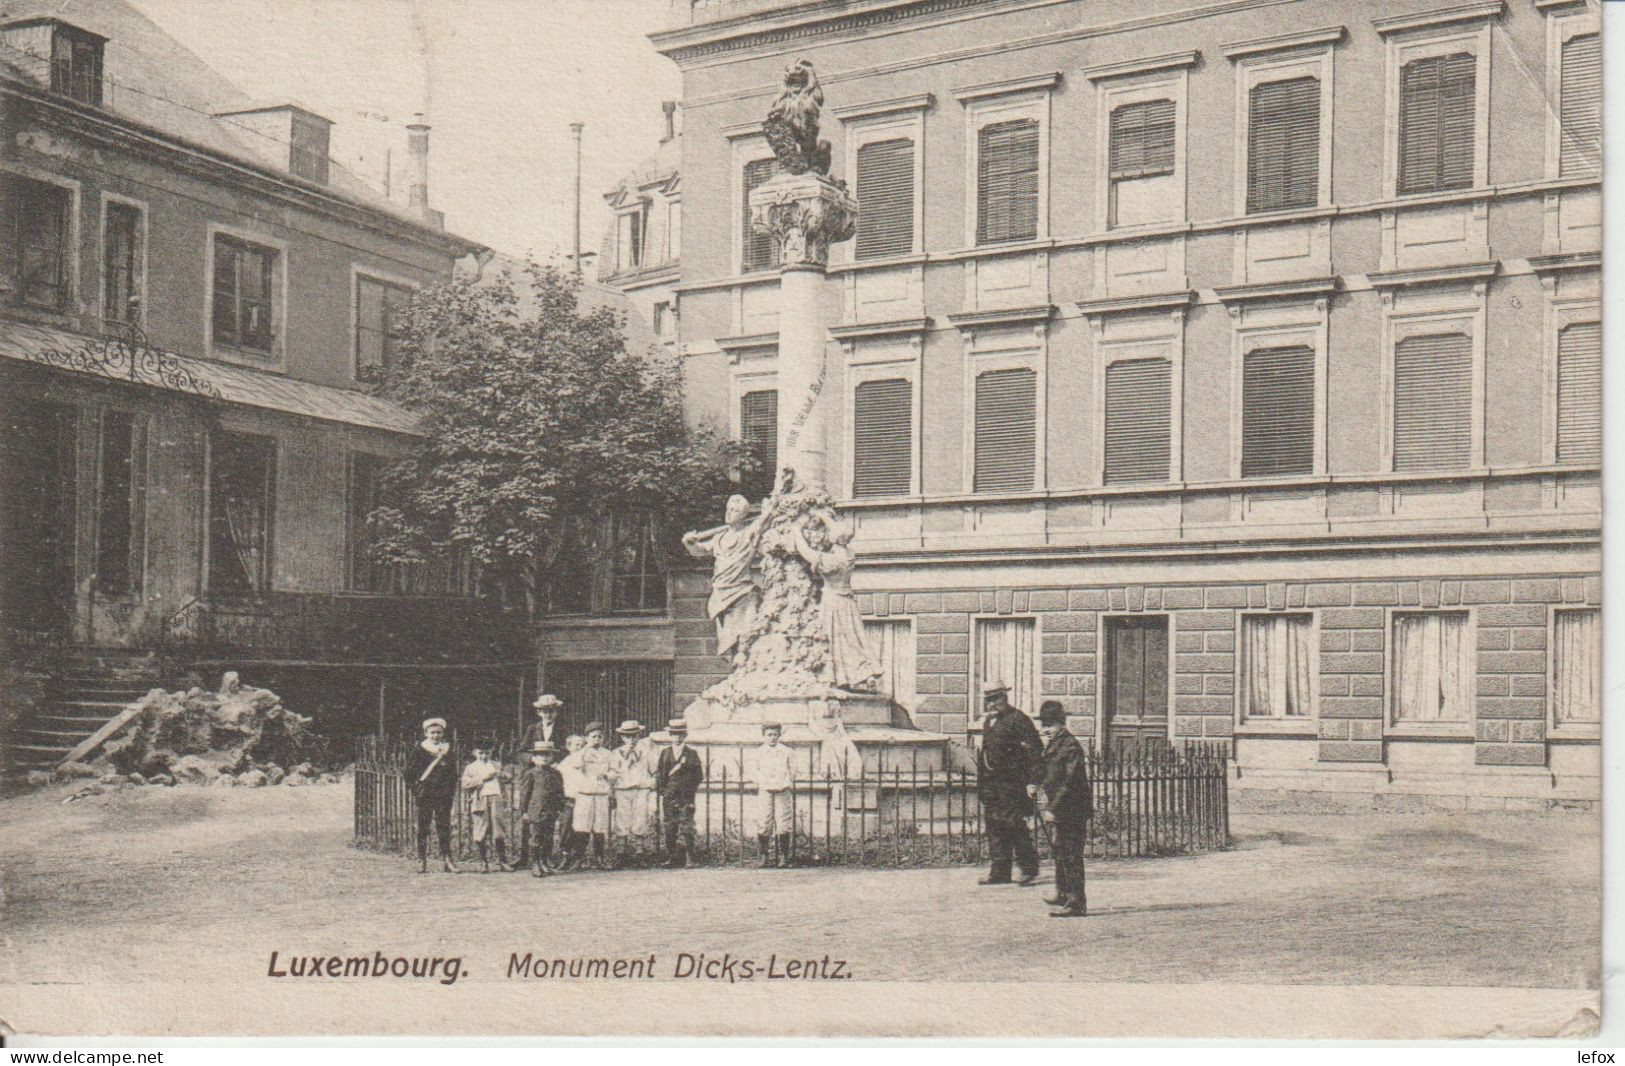 LUXEMBOURG MONUMENT DICKS LENTZ - Luxembourg - Ville